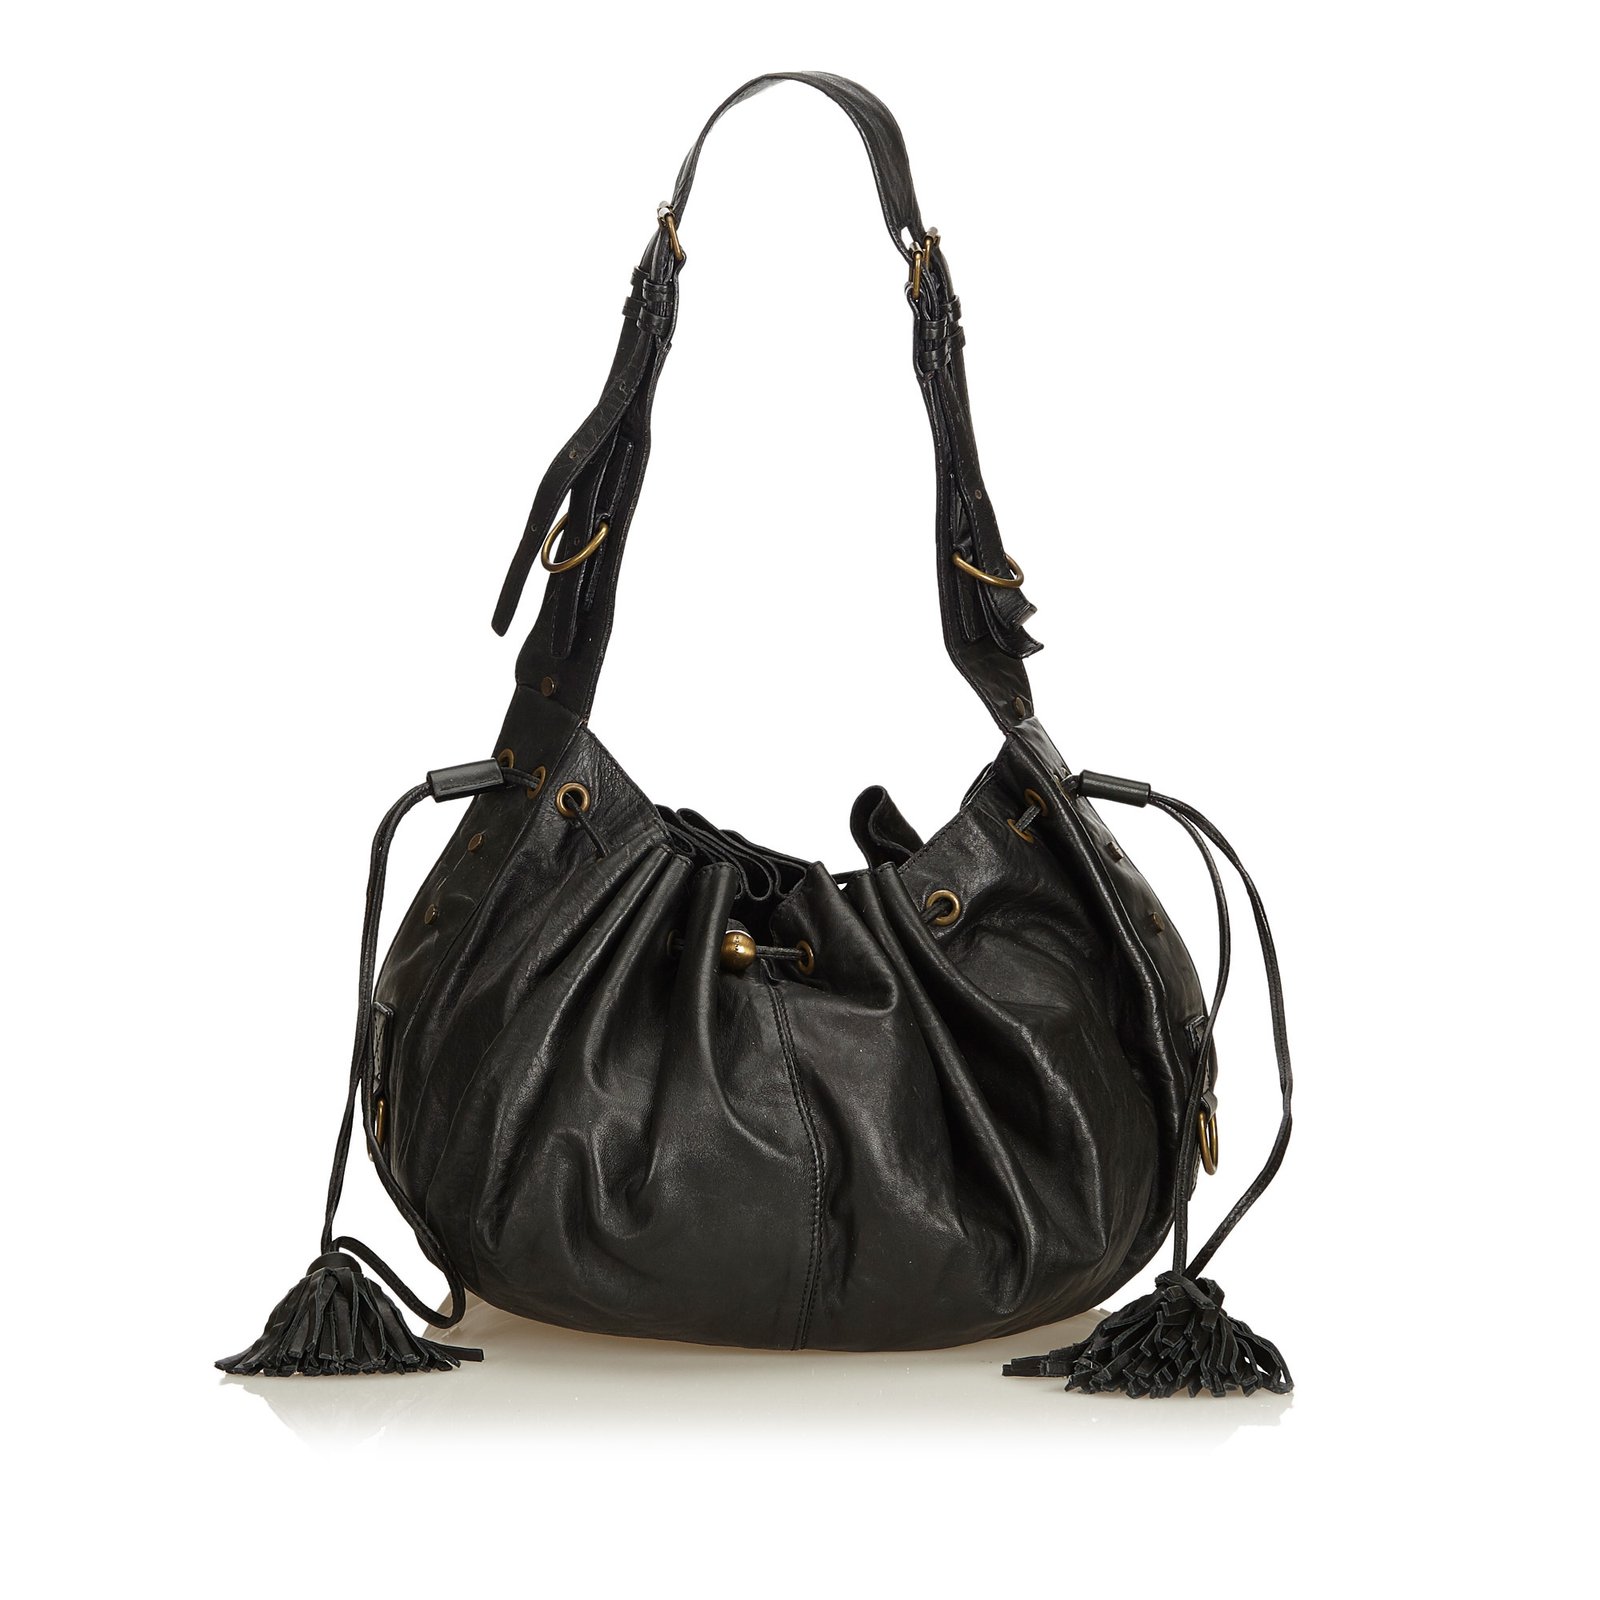 Givenchy Leather Tassel Hobo Bag 